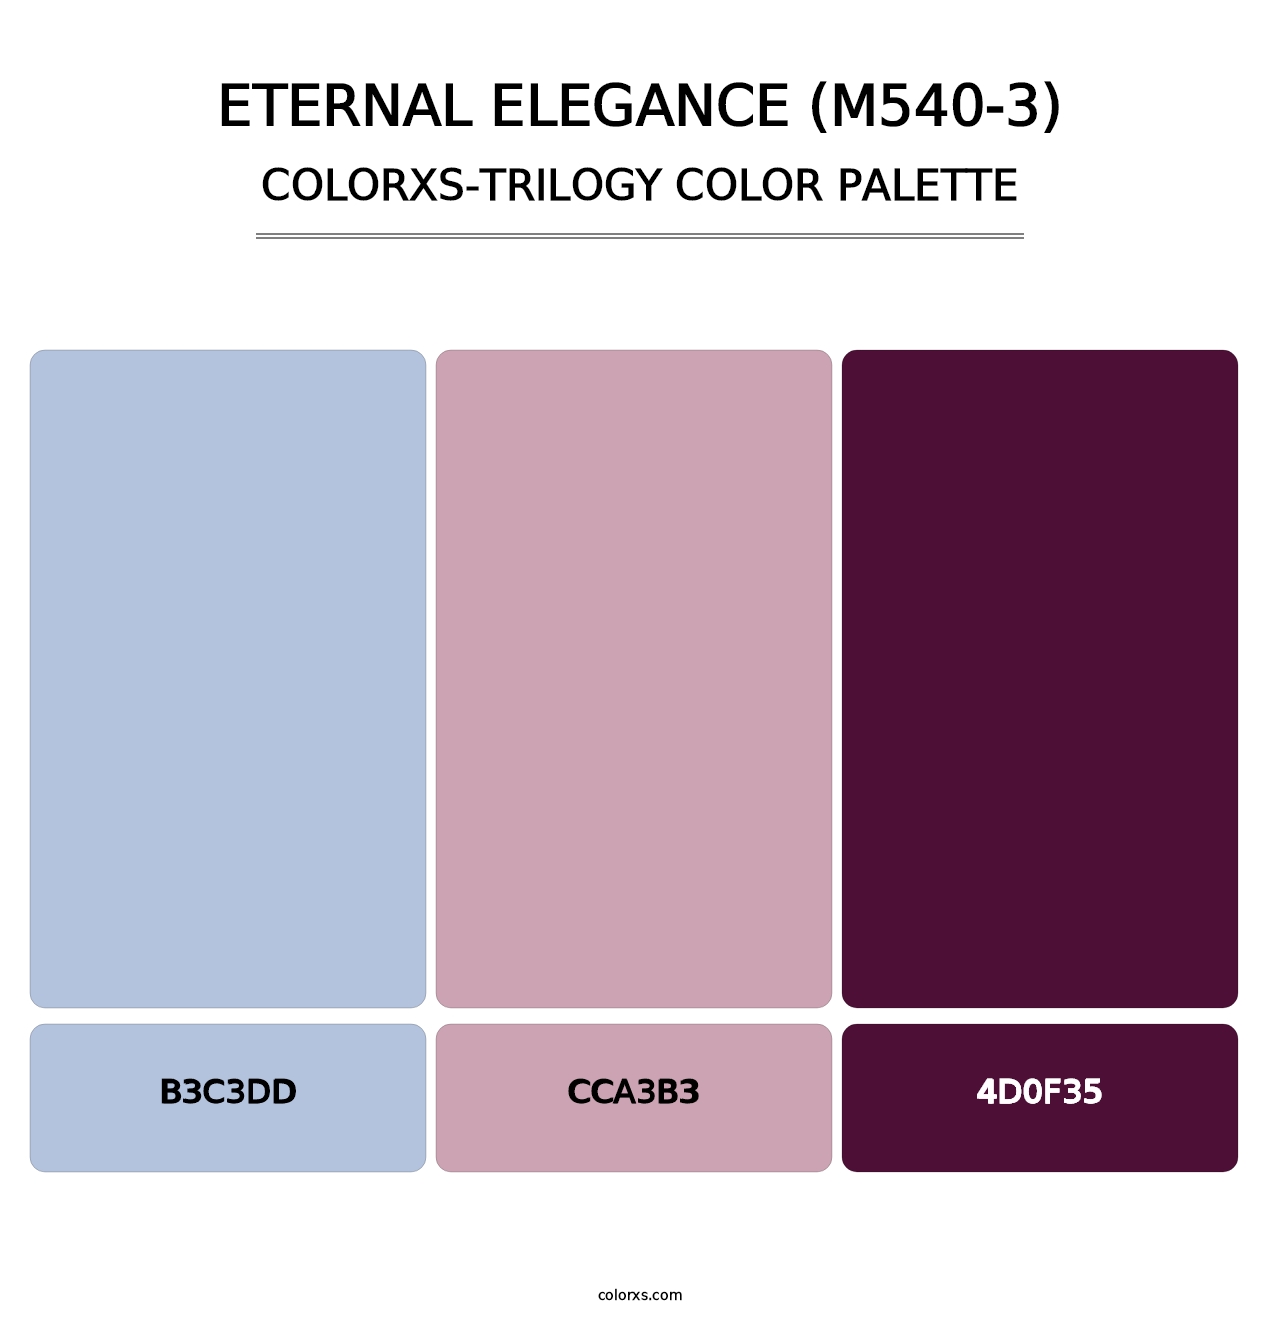 Eternal Elegance (M540-3) - Colorxs Trilogy Palette